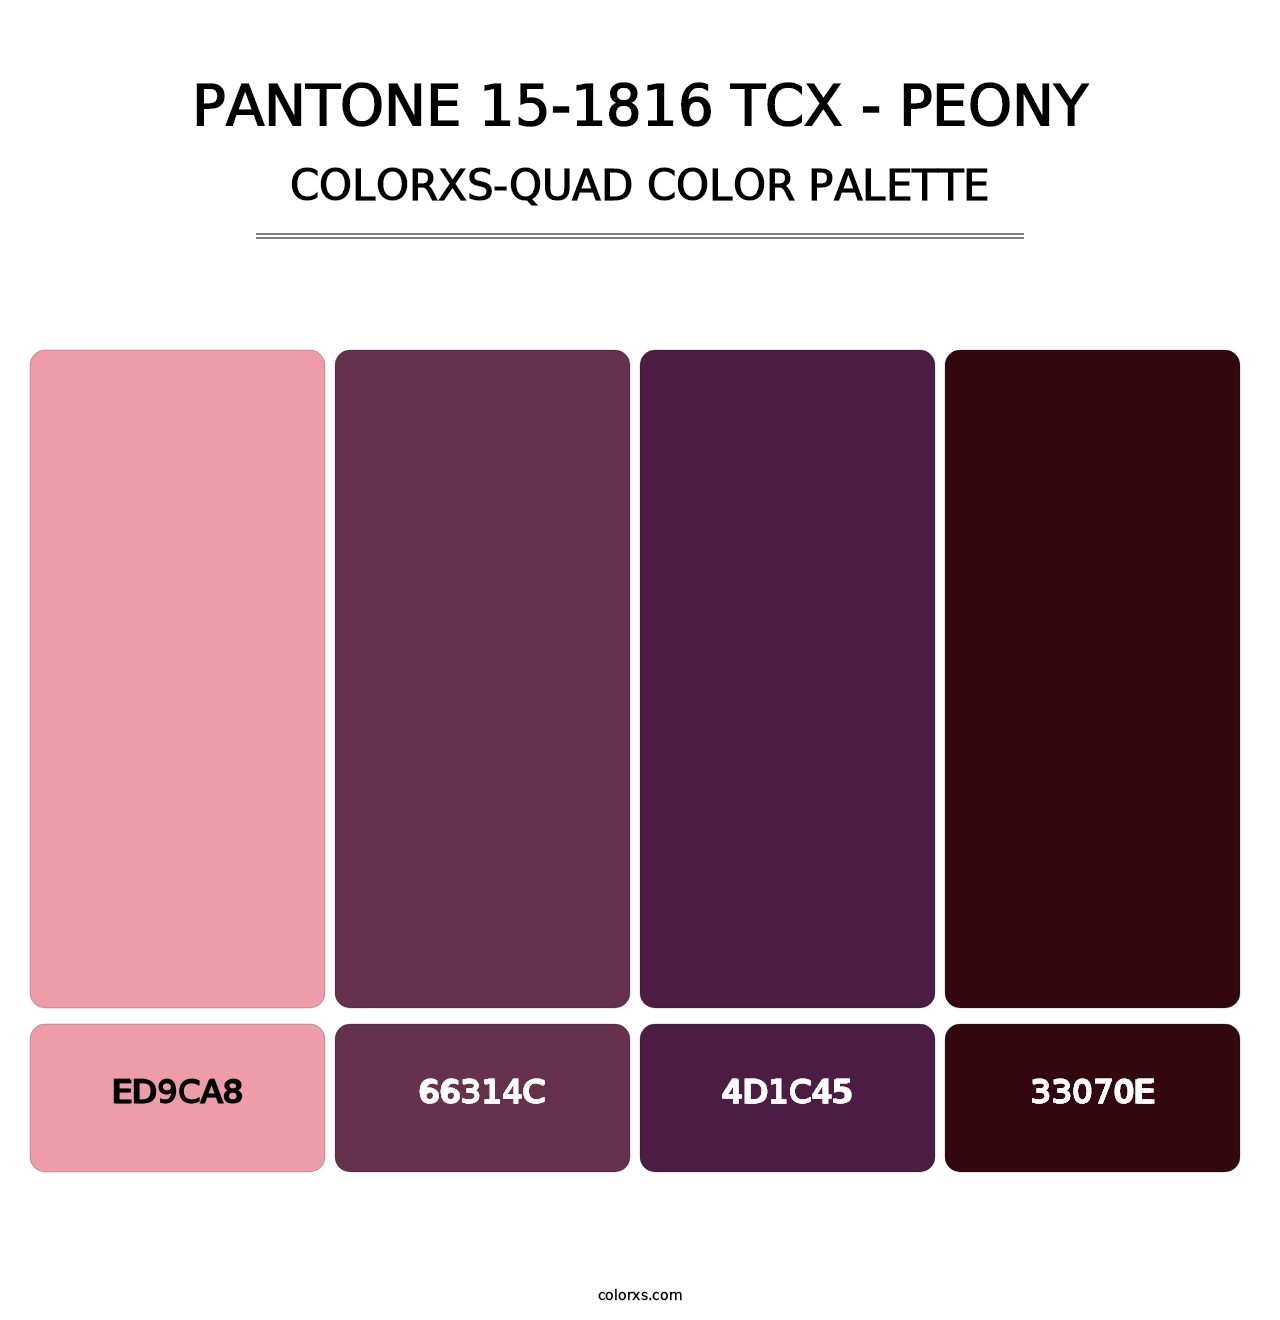 PANTONE 15-1816 TCX - Peony - Colorxs Quad Palette